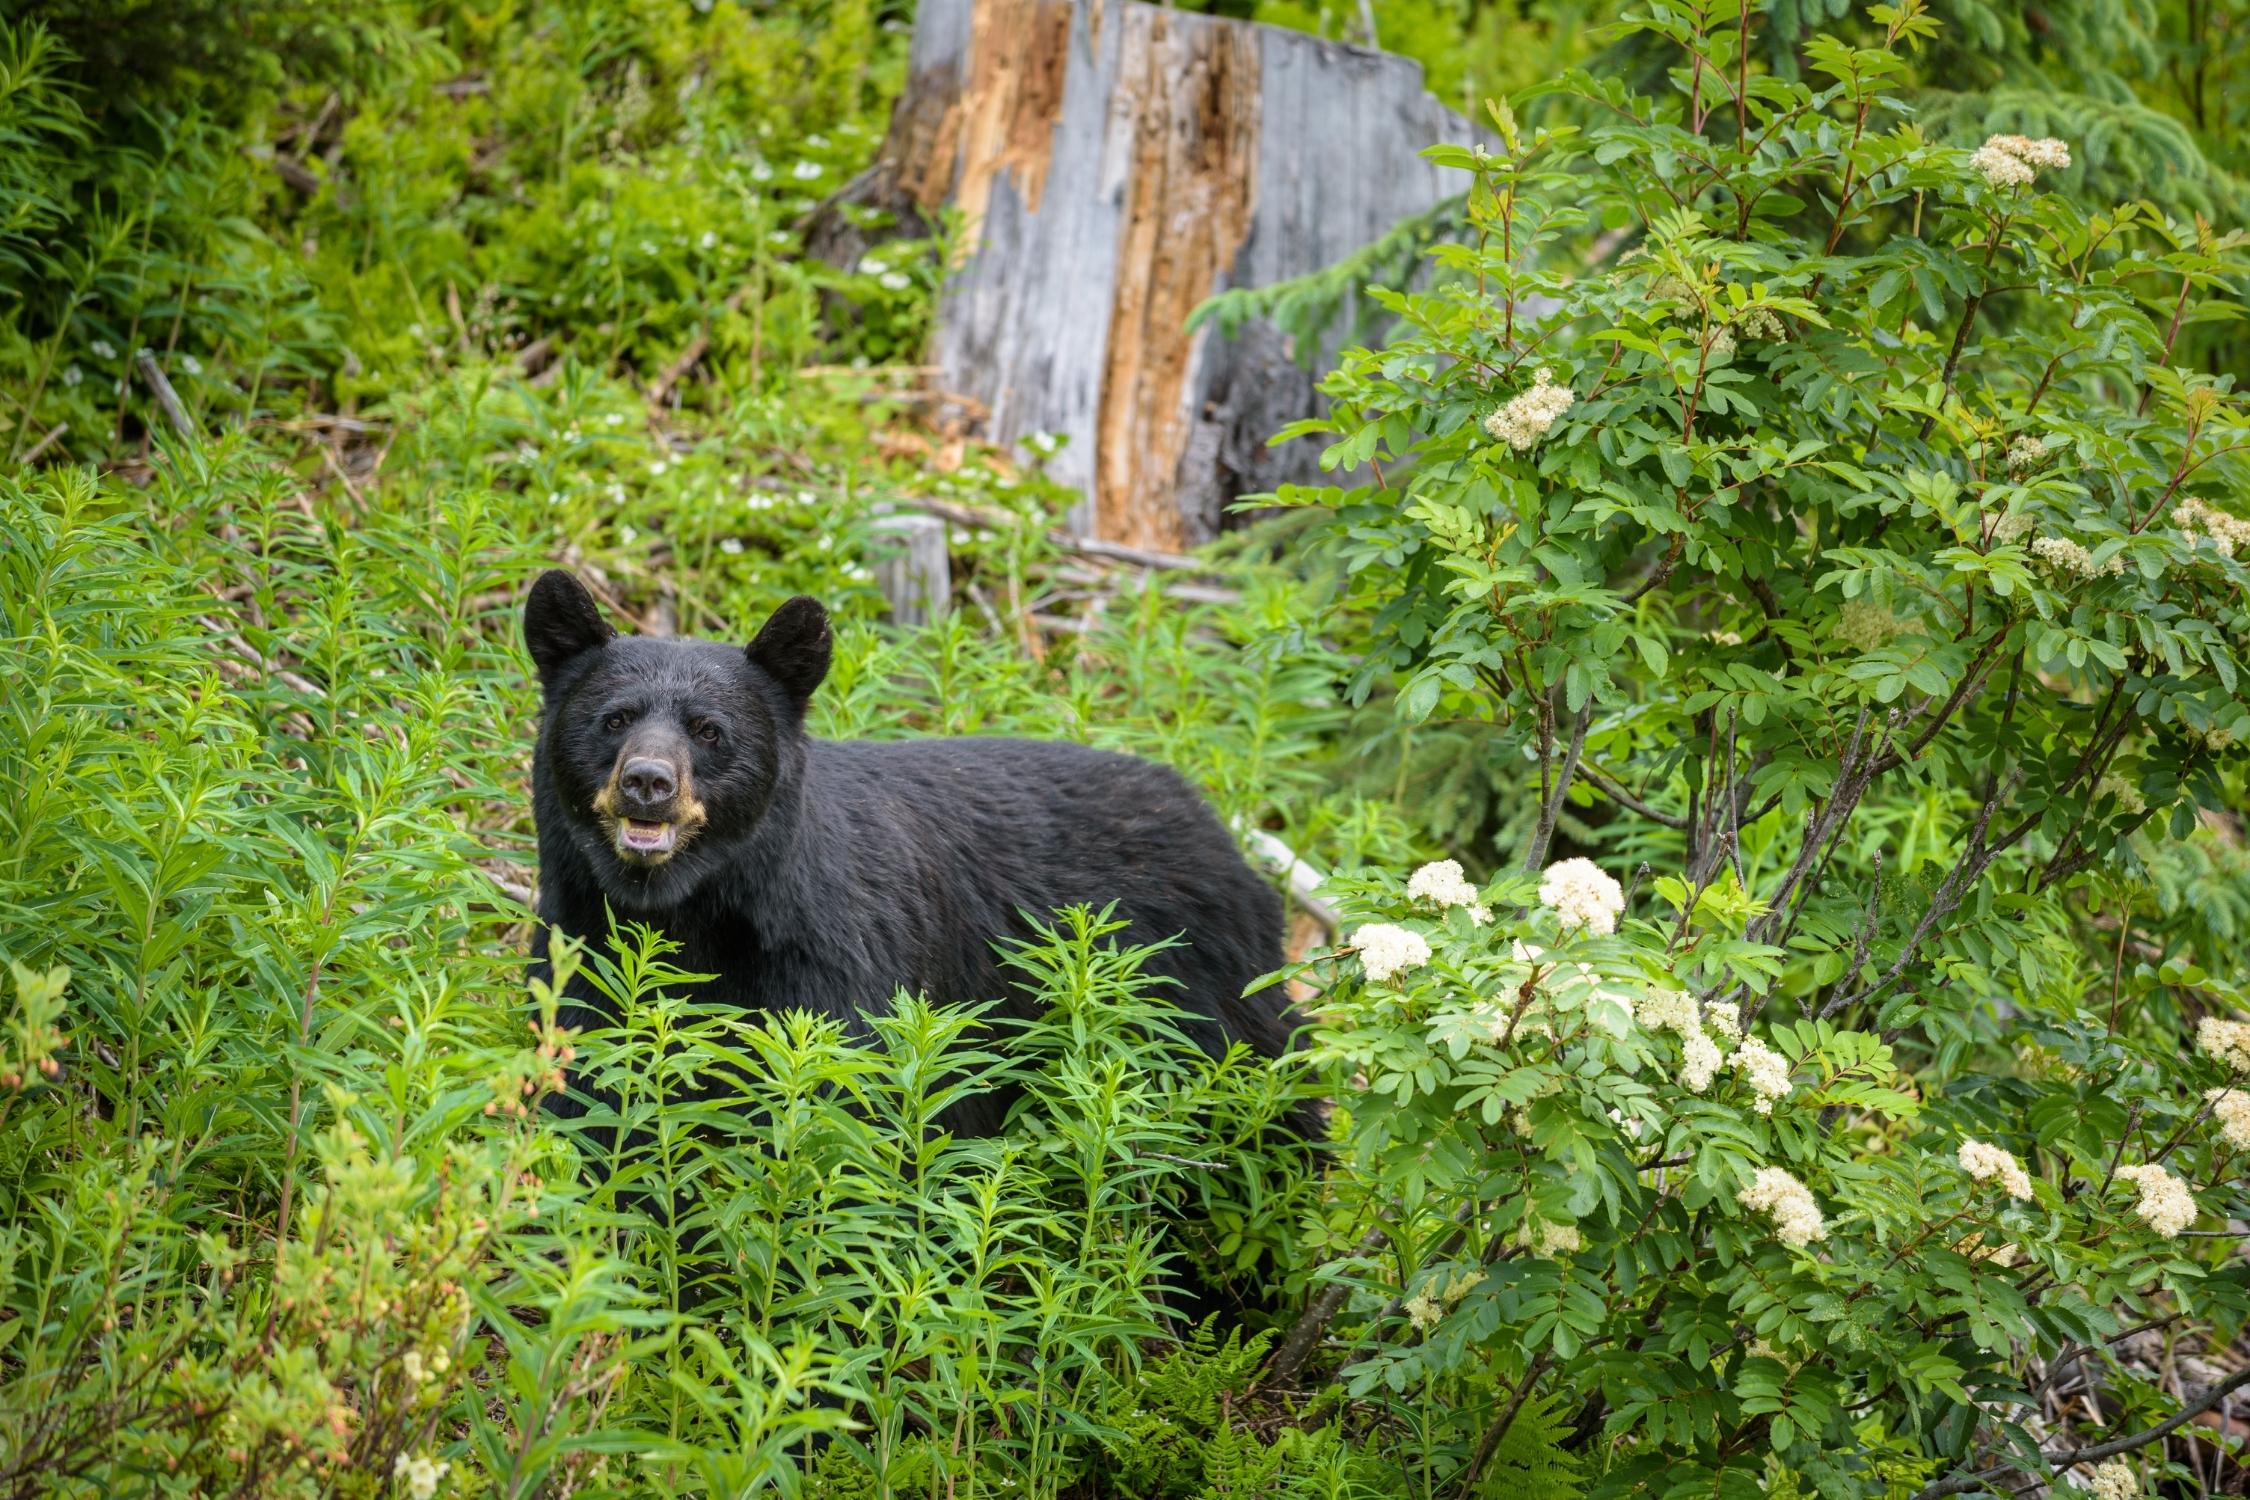 A black bear behind thick vegetation